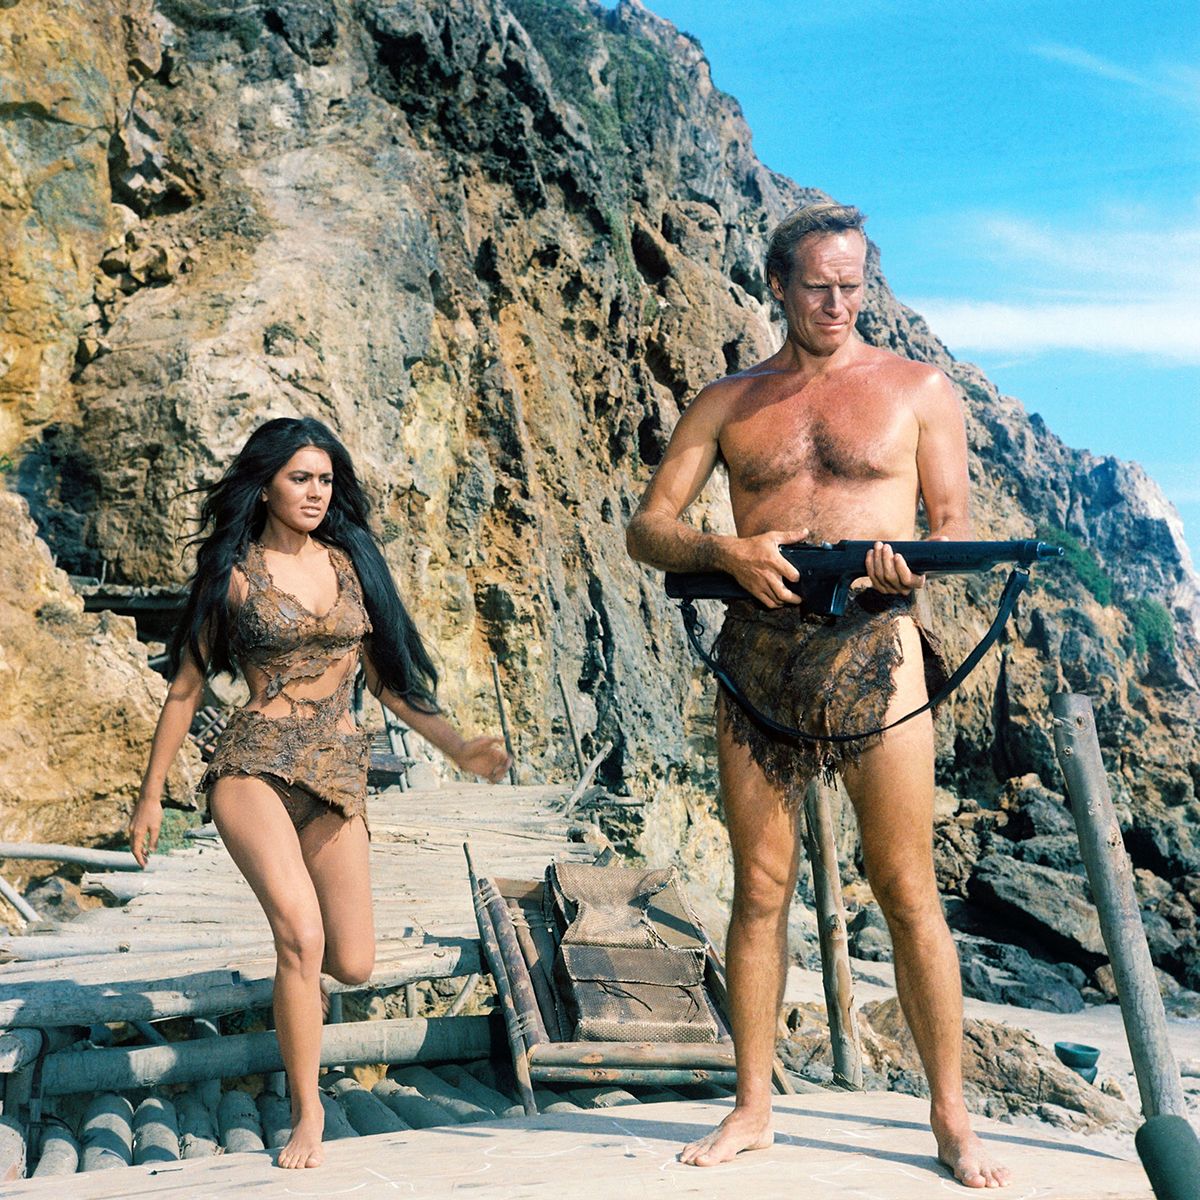 1968 - Planet of the Apes  - Movie Set
Majmok bolygója
CHARLTON HESTON és George Taylor